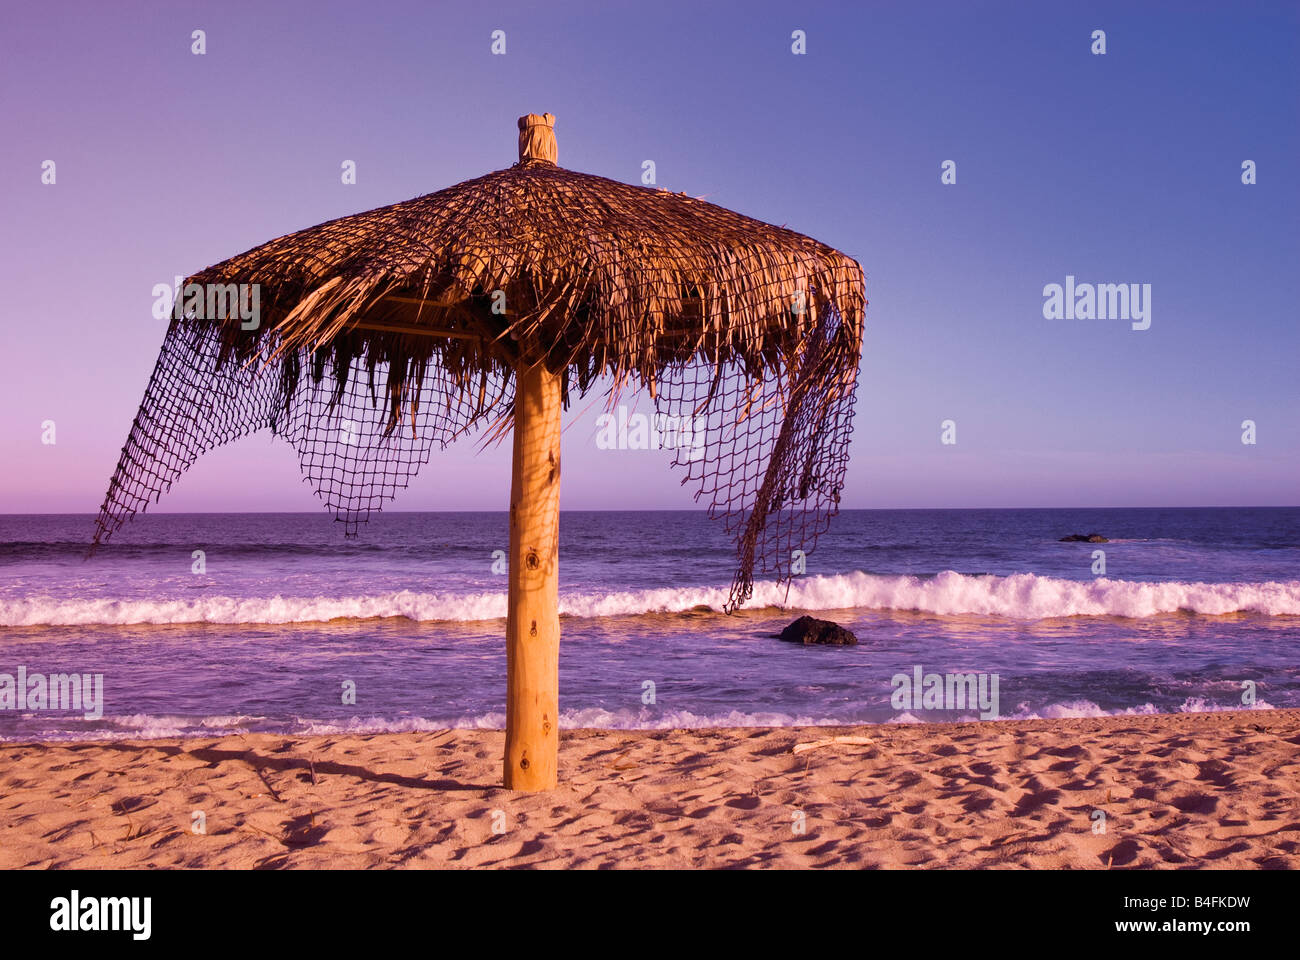 Palapa on beach at sunset near Punta Gorda in Baja California Sur Mexico Stock Photo